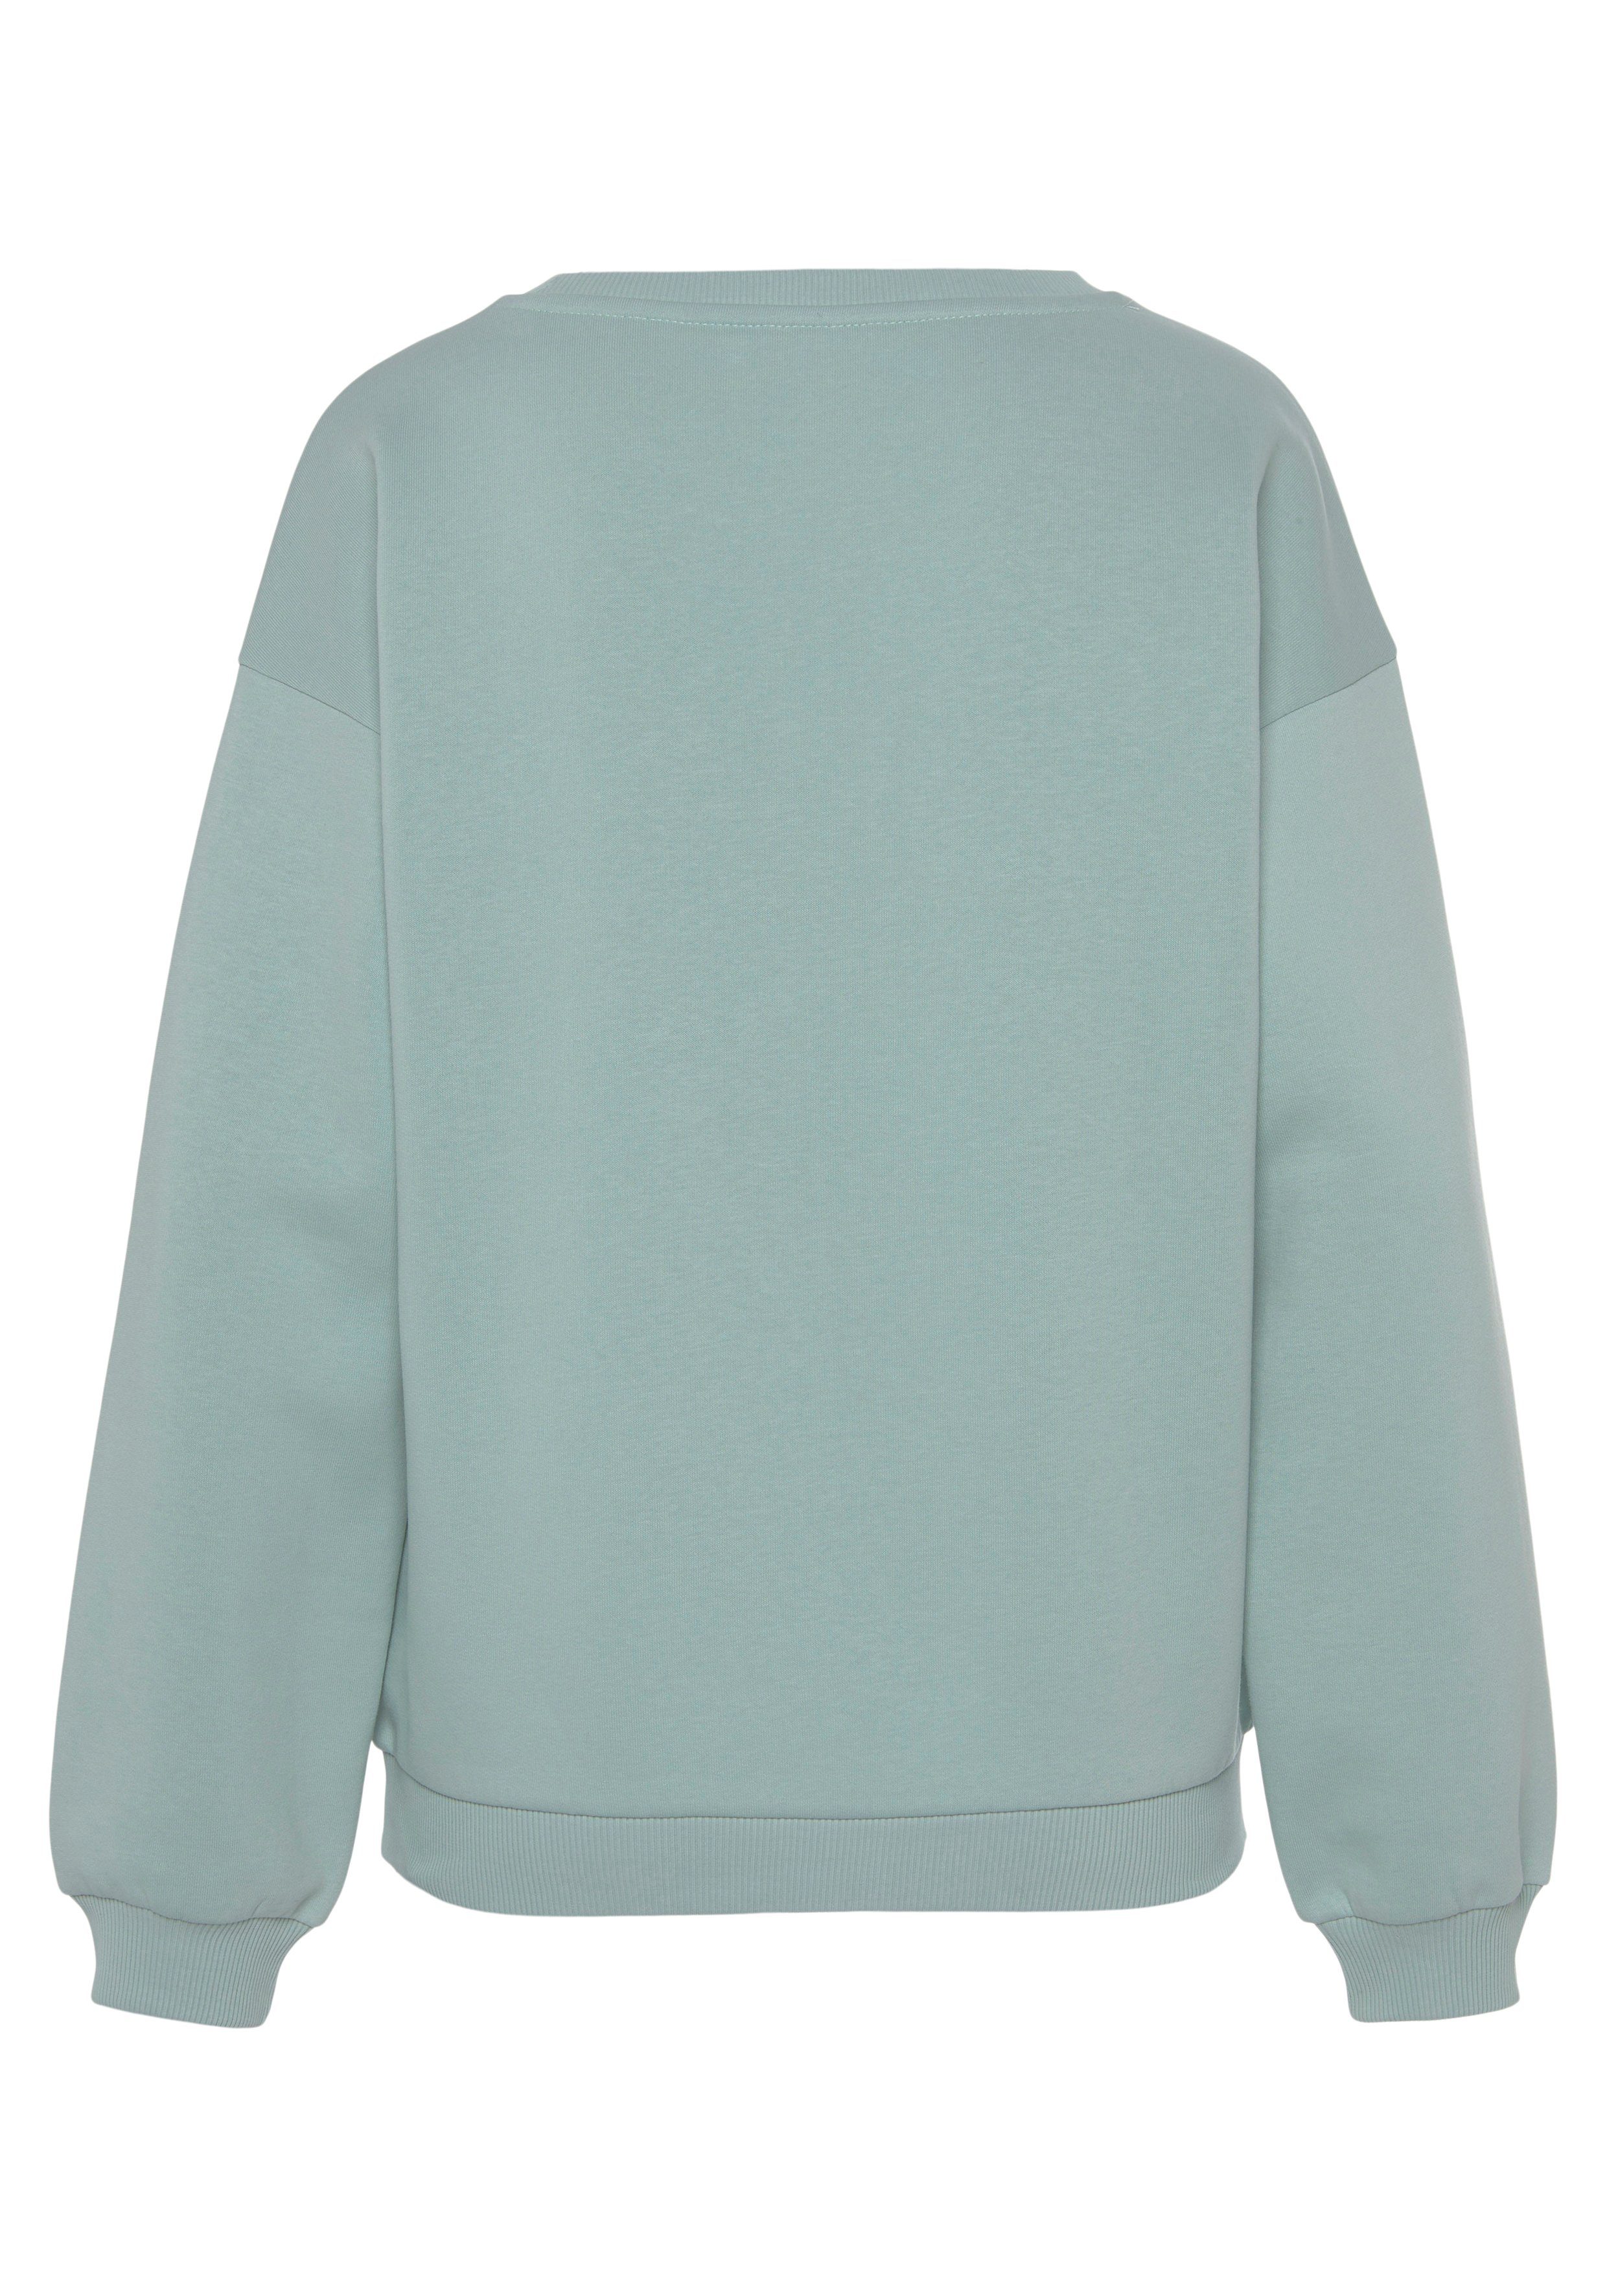 Lascana Sweatshirt -Pullover